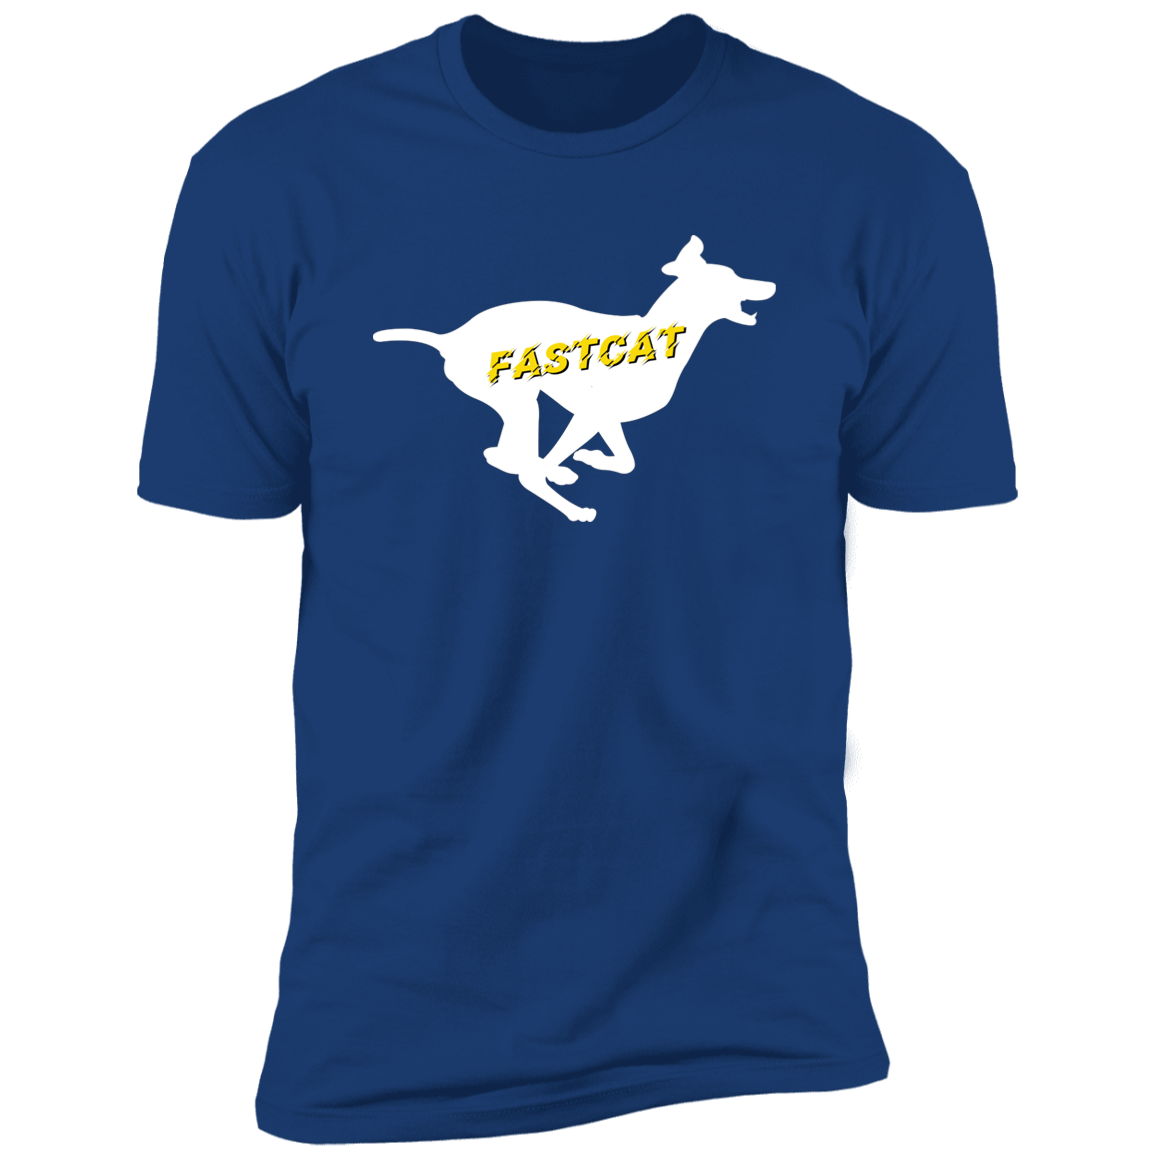 FastCAT Dog T-shirt, sporting dog t-shirt for humans, FastCAT t-shirt, in royal blue